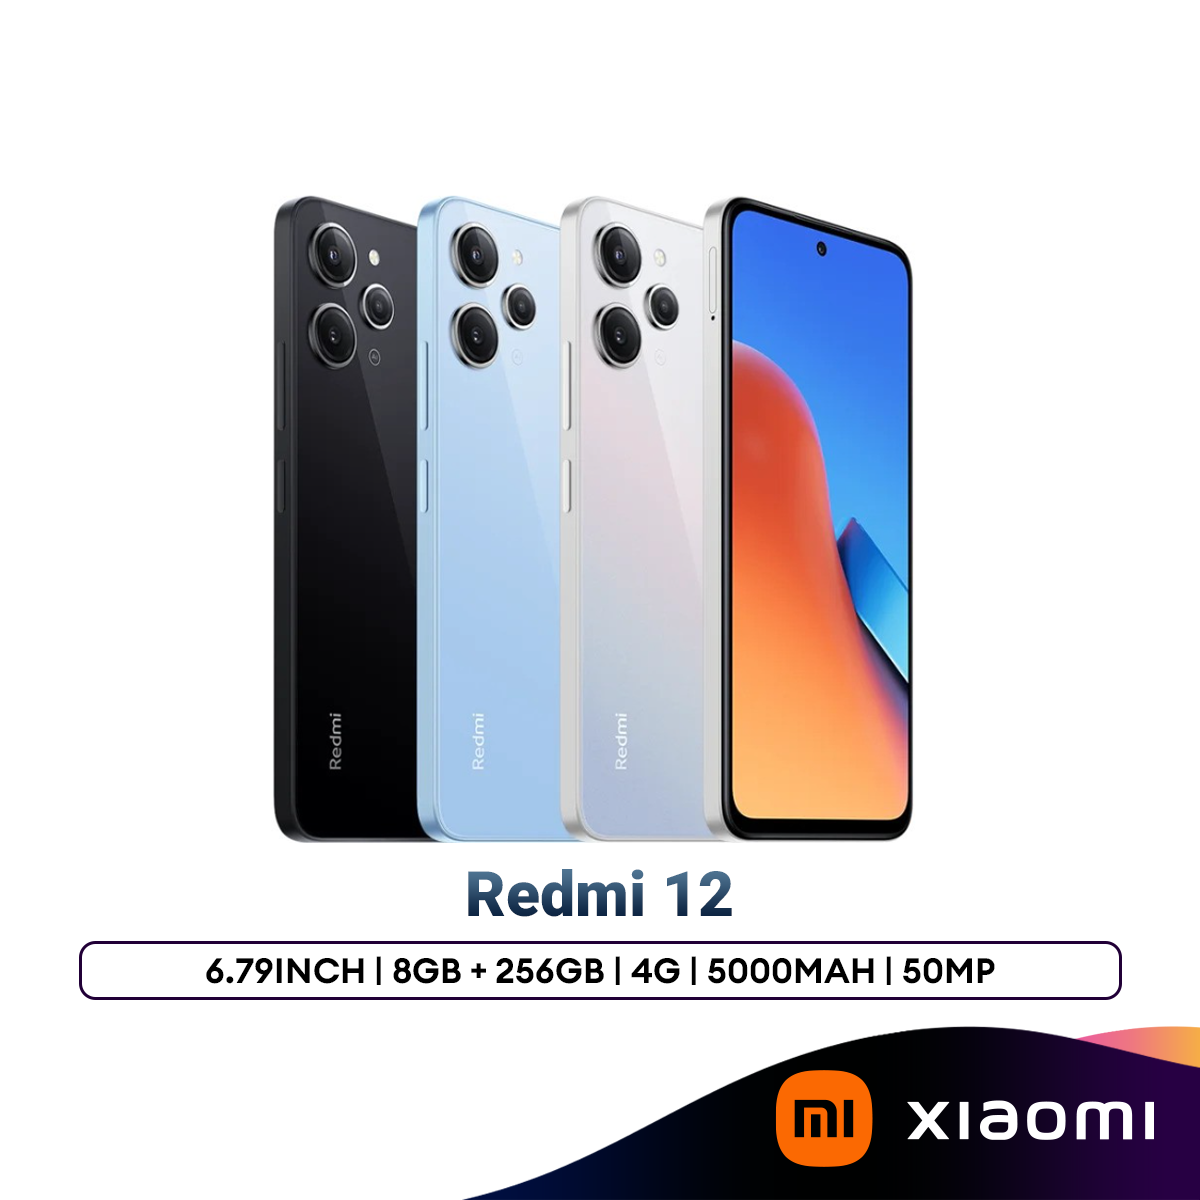 Redmi 12 5G Price in Malaysia & Specs - RM999